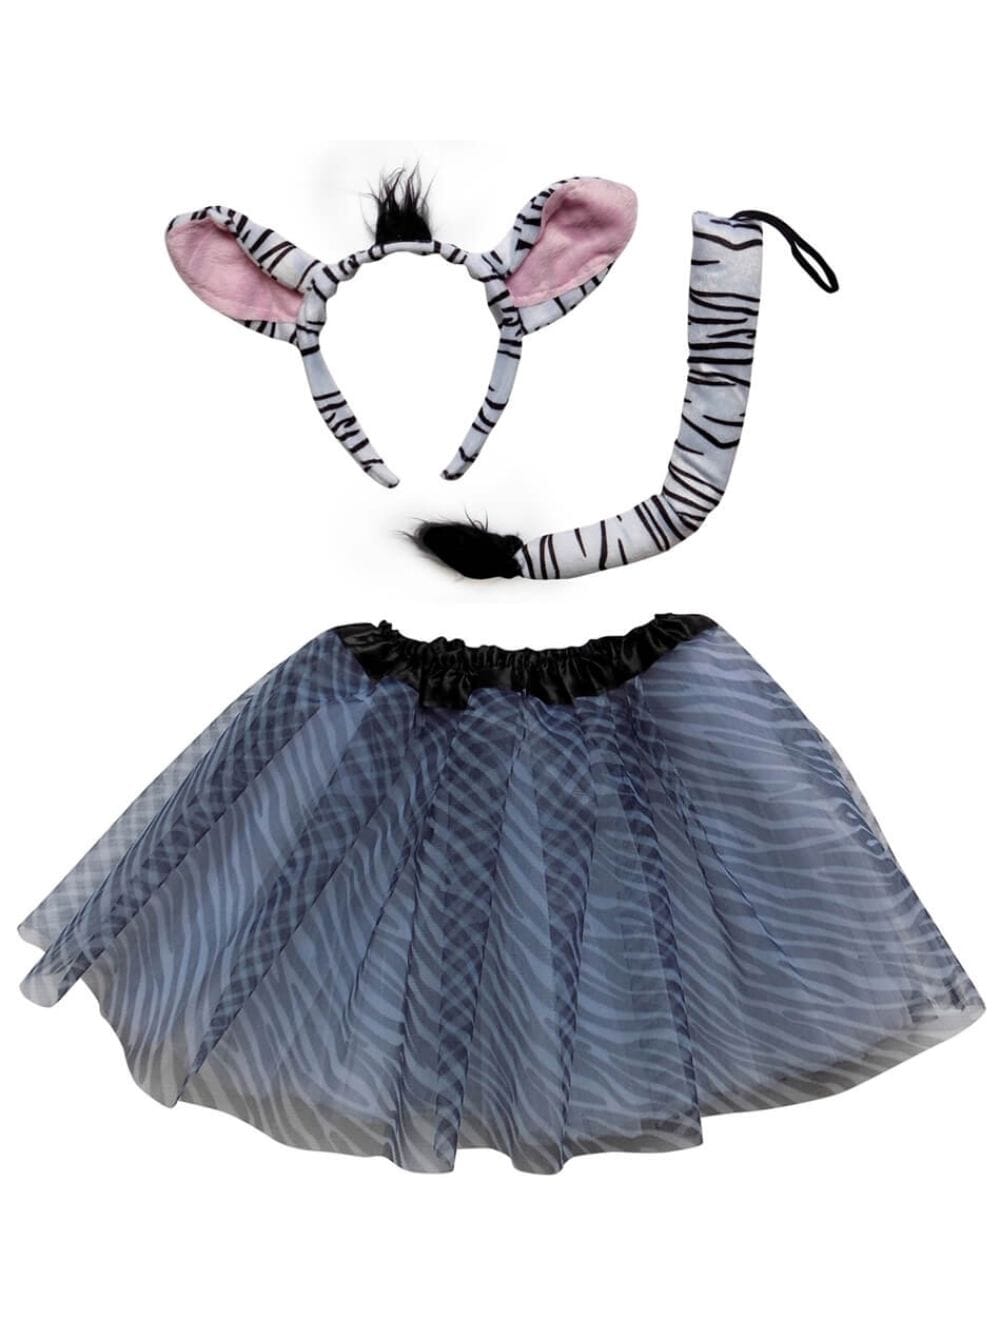 Adult Zebra Costume - Animal Print Tutu Skirt, Tail, & Headband Set for Adult or Plus Size - Sydney So Sweet